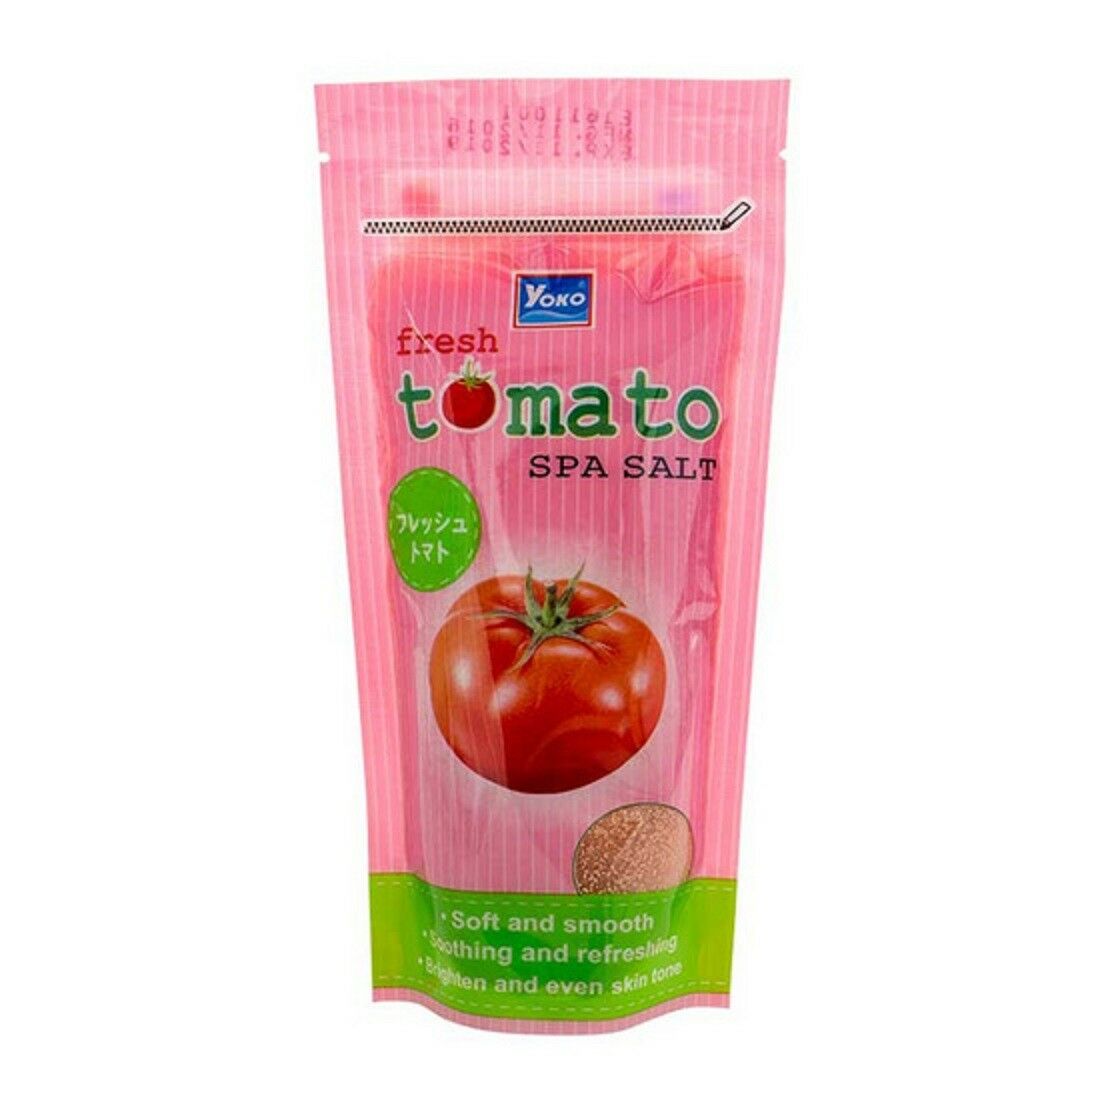 Yoko Fresh Tomato Spa Salt 300g - Asian Beauty Supply